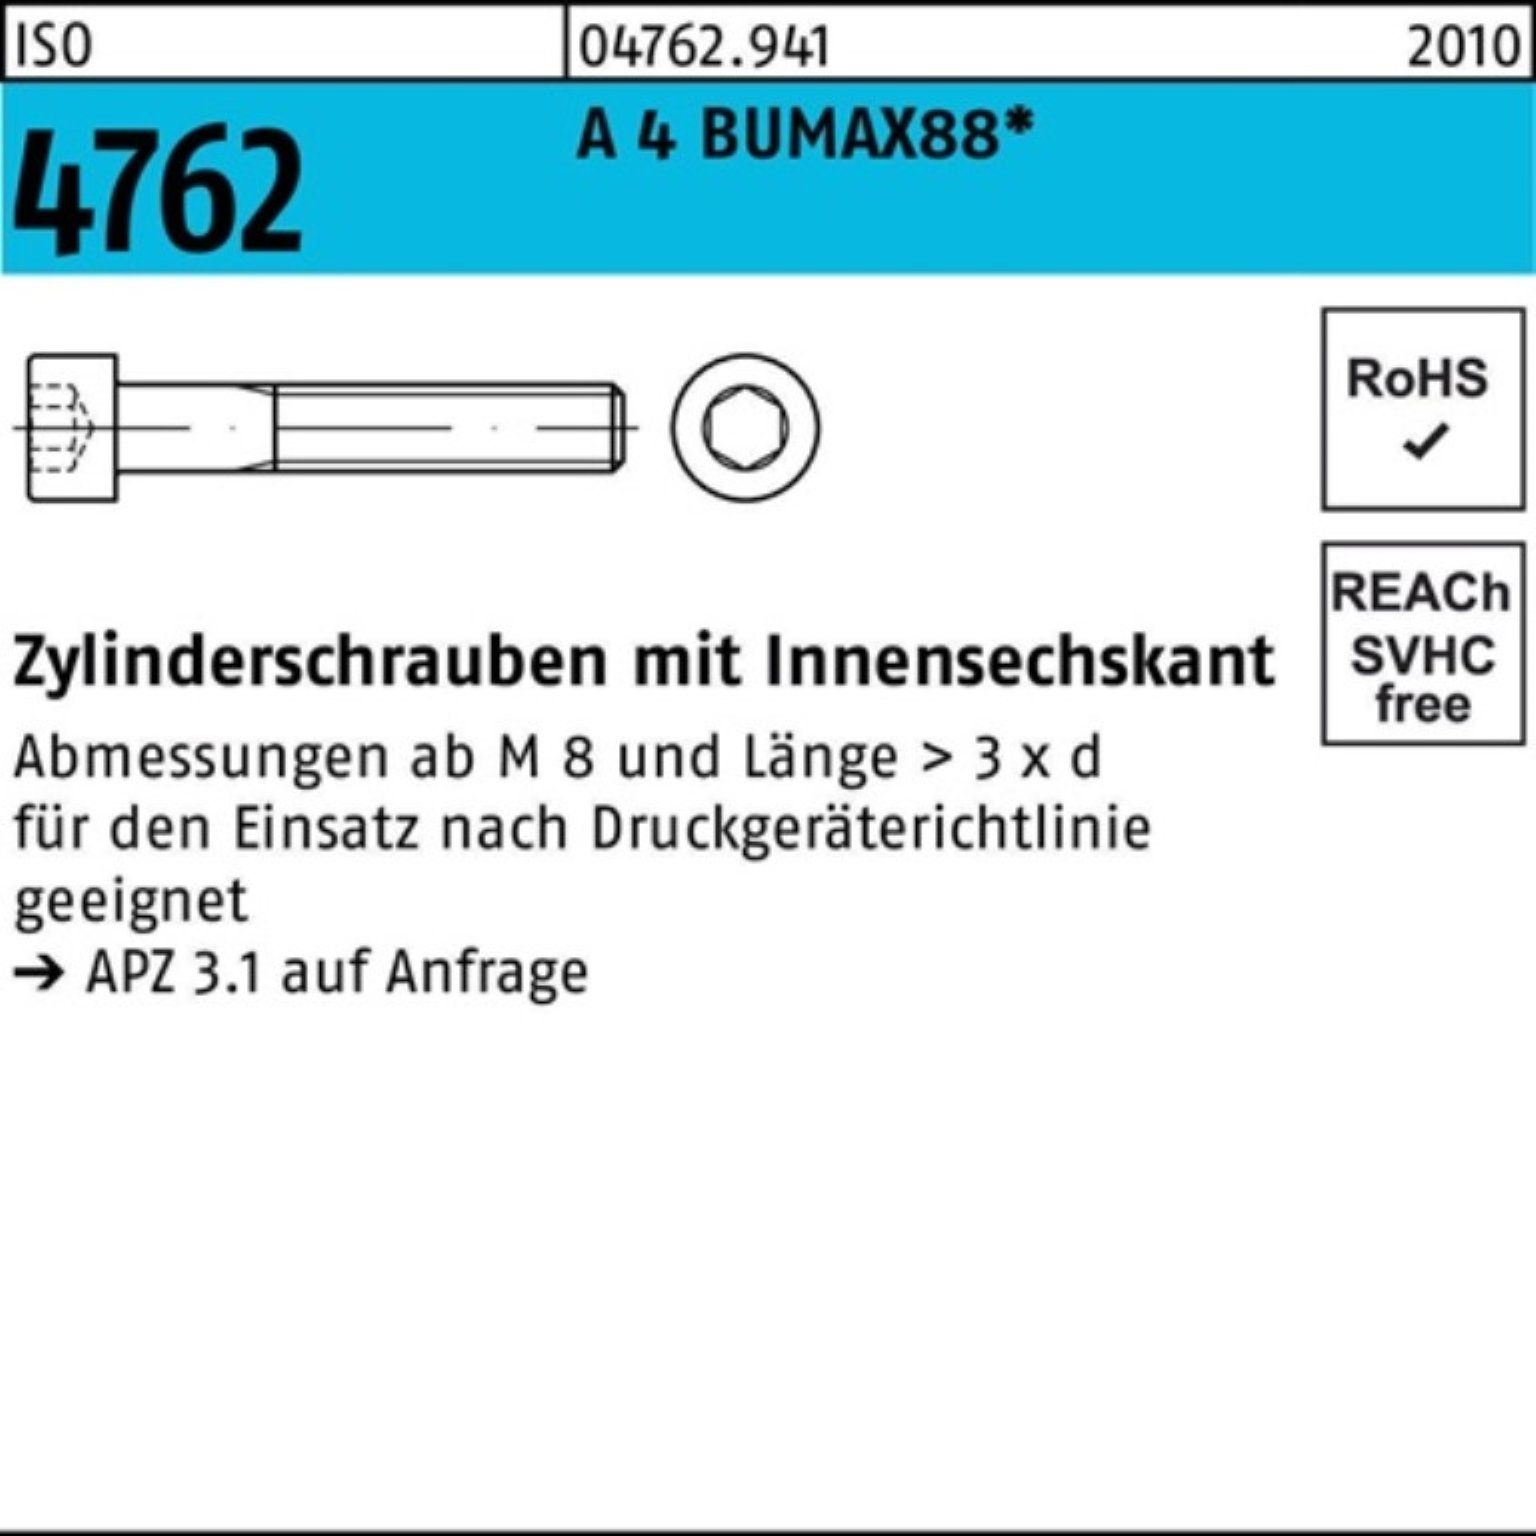 Zylinderschraube 4 Bufab 30 Pack A Innen-6kt 4762 Zylinderschraube BUMAX88 M12x 100er ISO 25